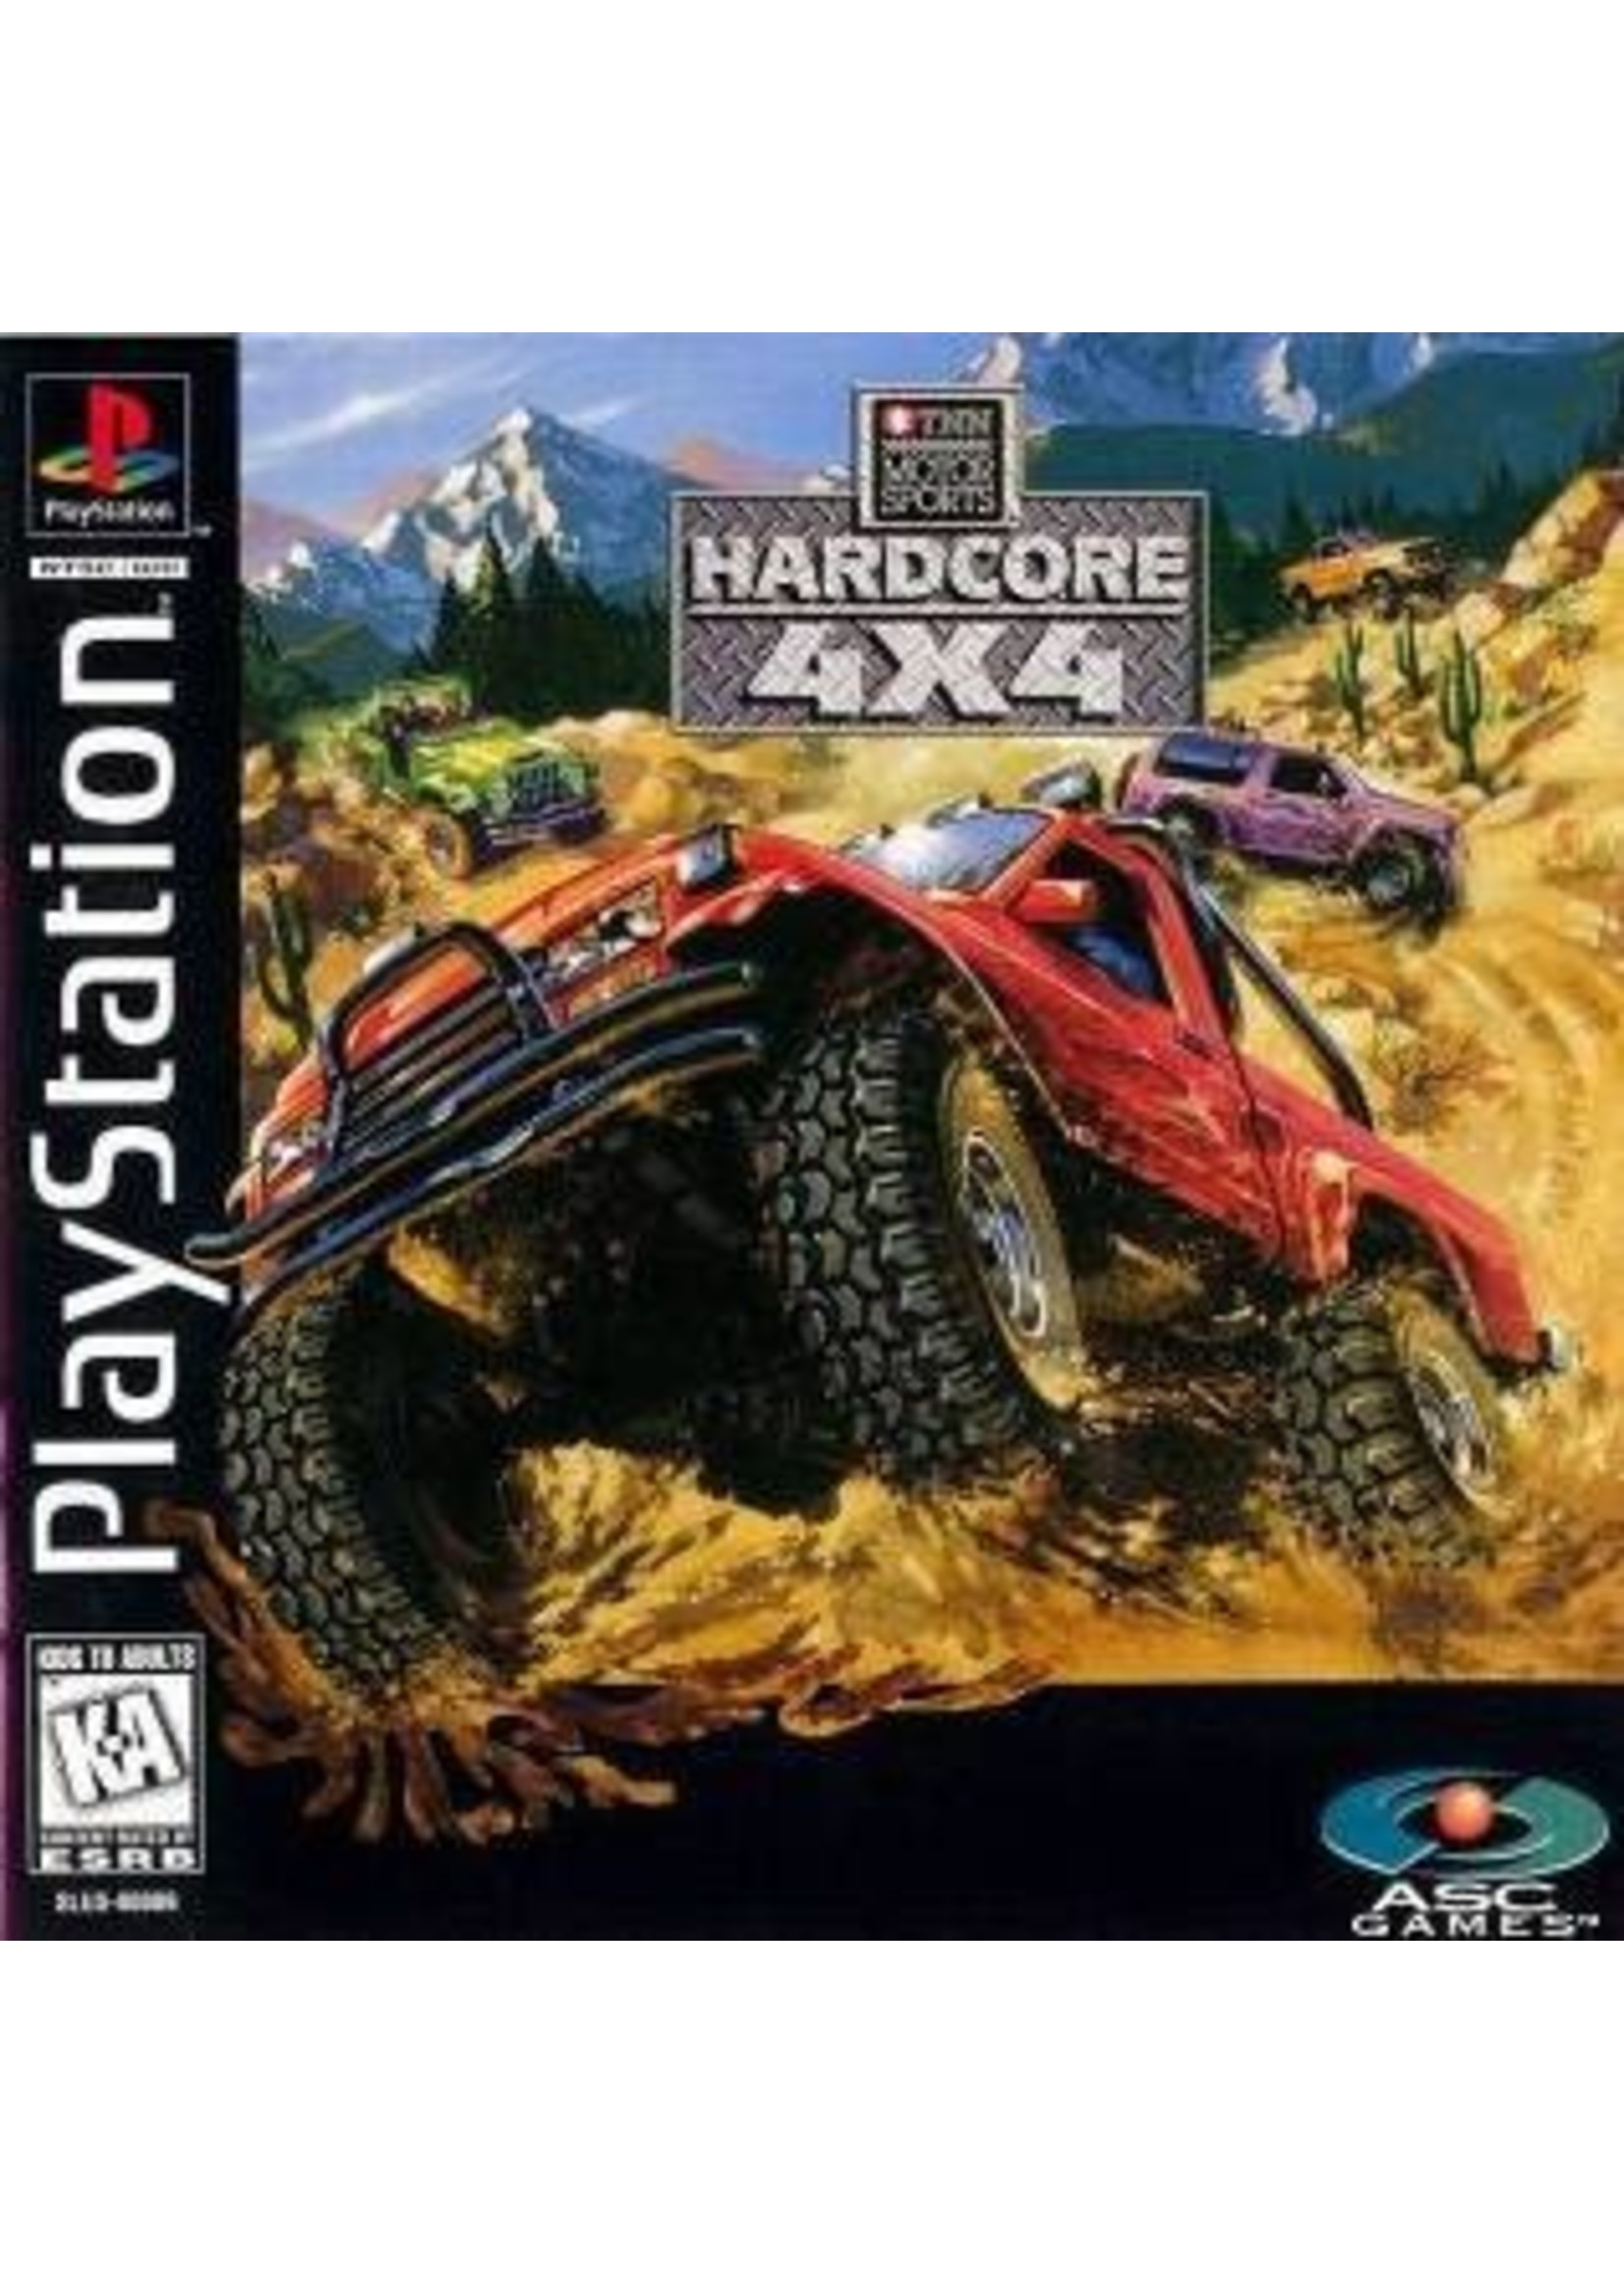 Sony Playstation 1 (PS1) TNN Motorsports Hardcore 4X4